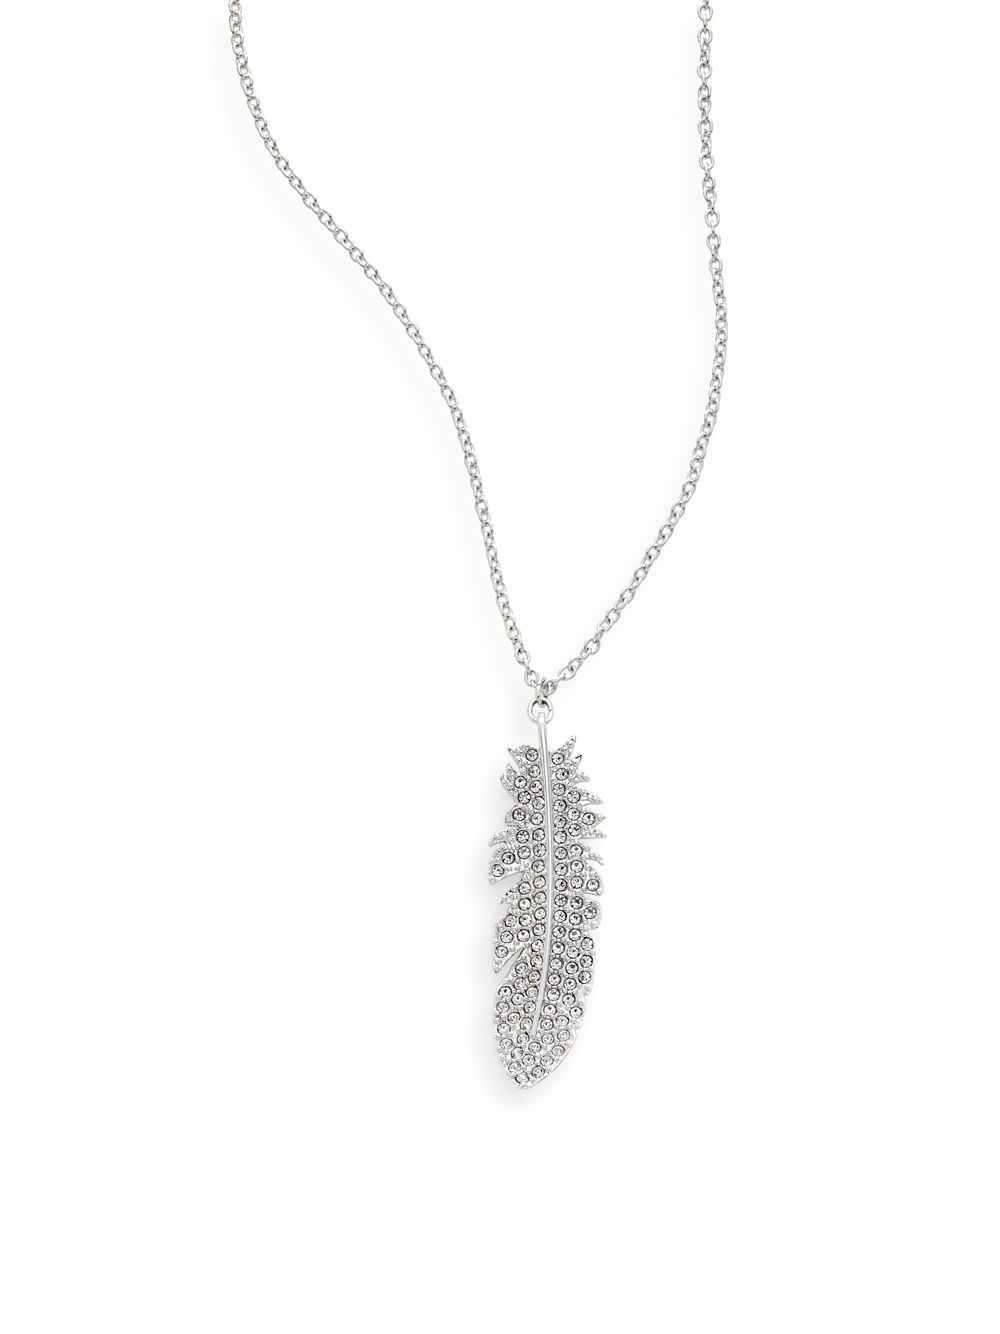 Swarovski Crystal Feather Fashion Necklaces & Pendants for sale | eBay